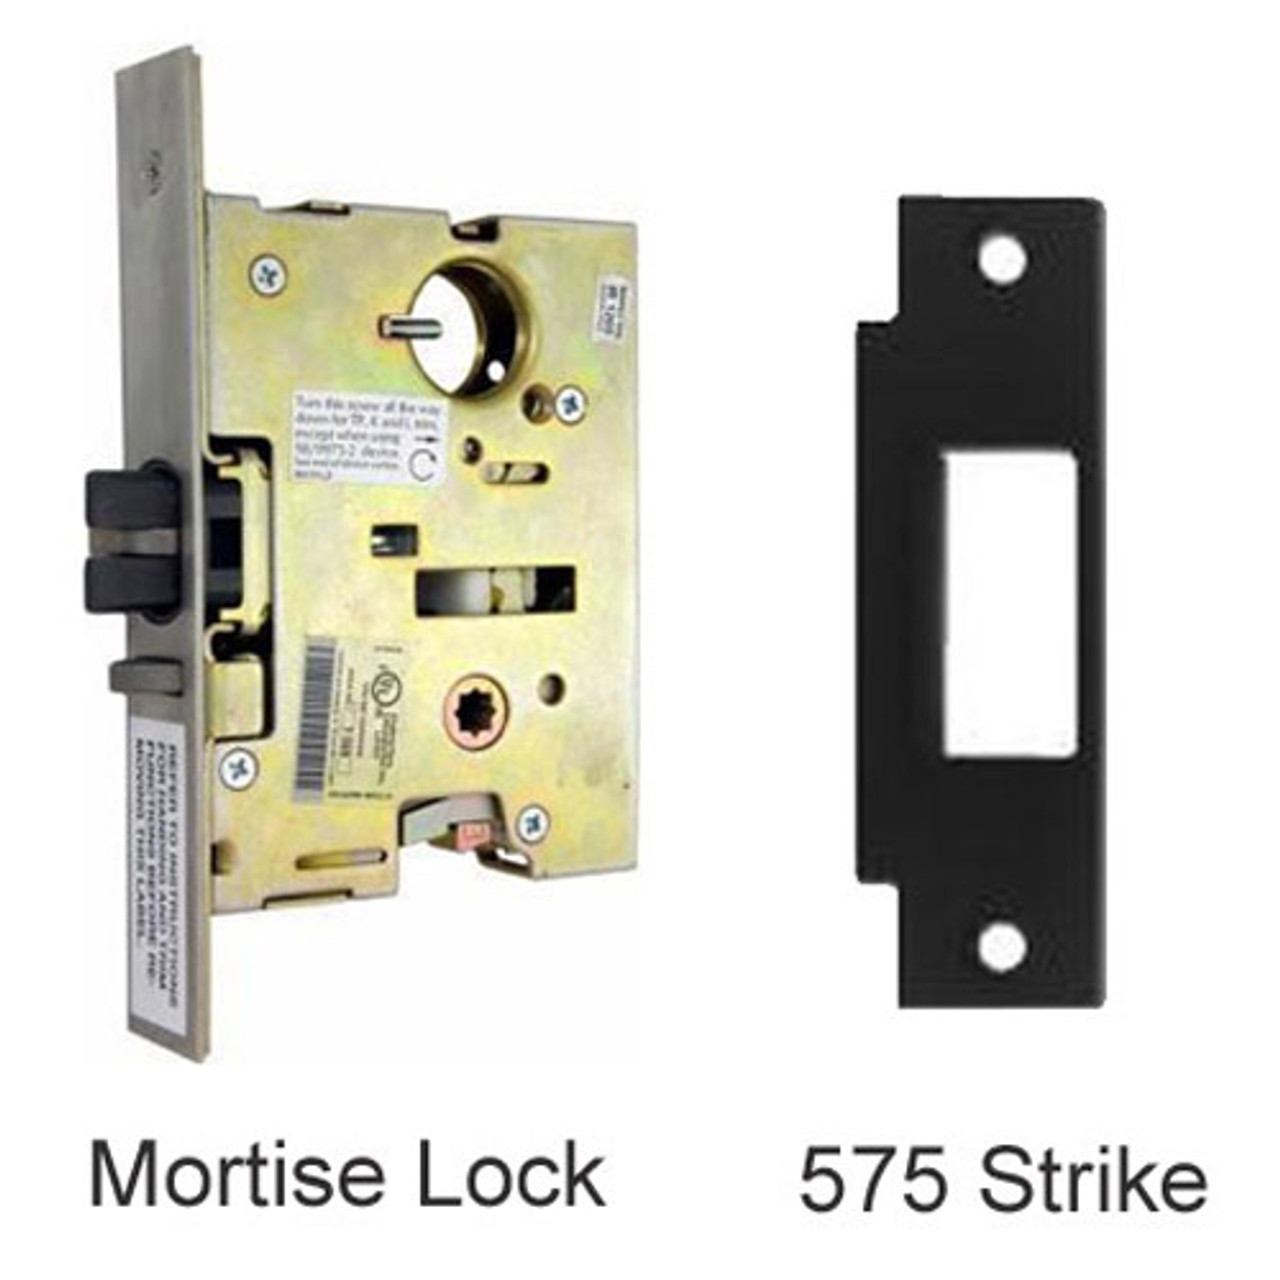 EL9875DT-US15-4 Von Duprin Mortise Lock and Strike